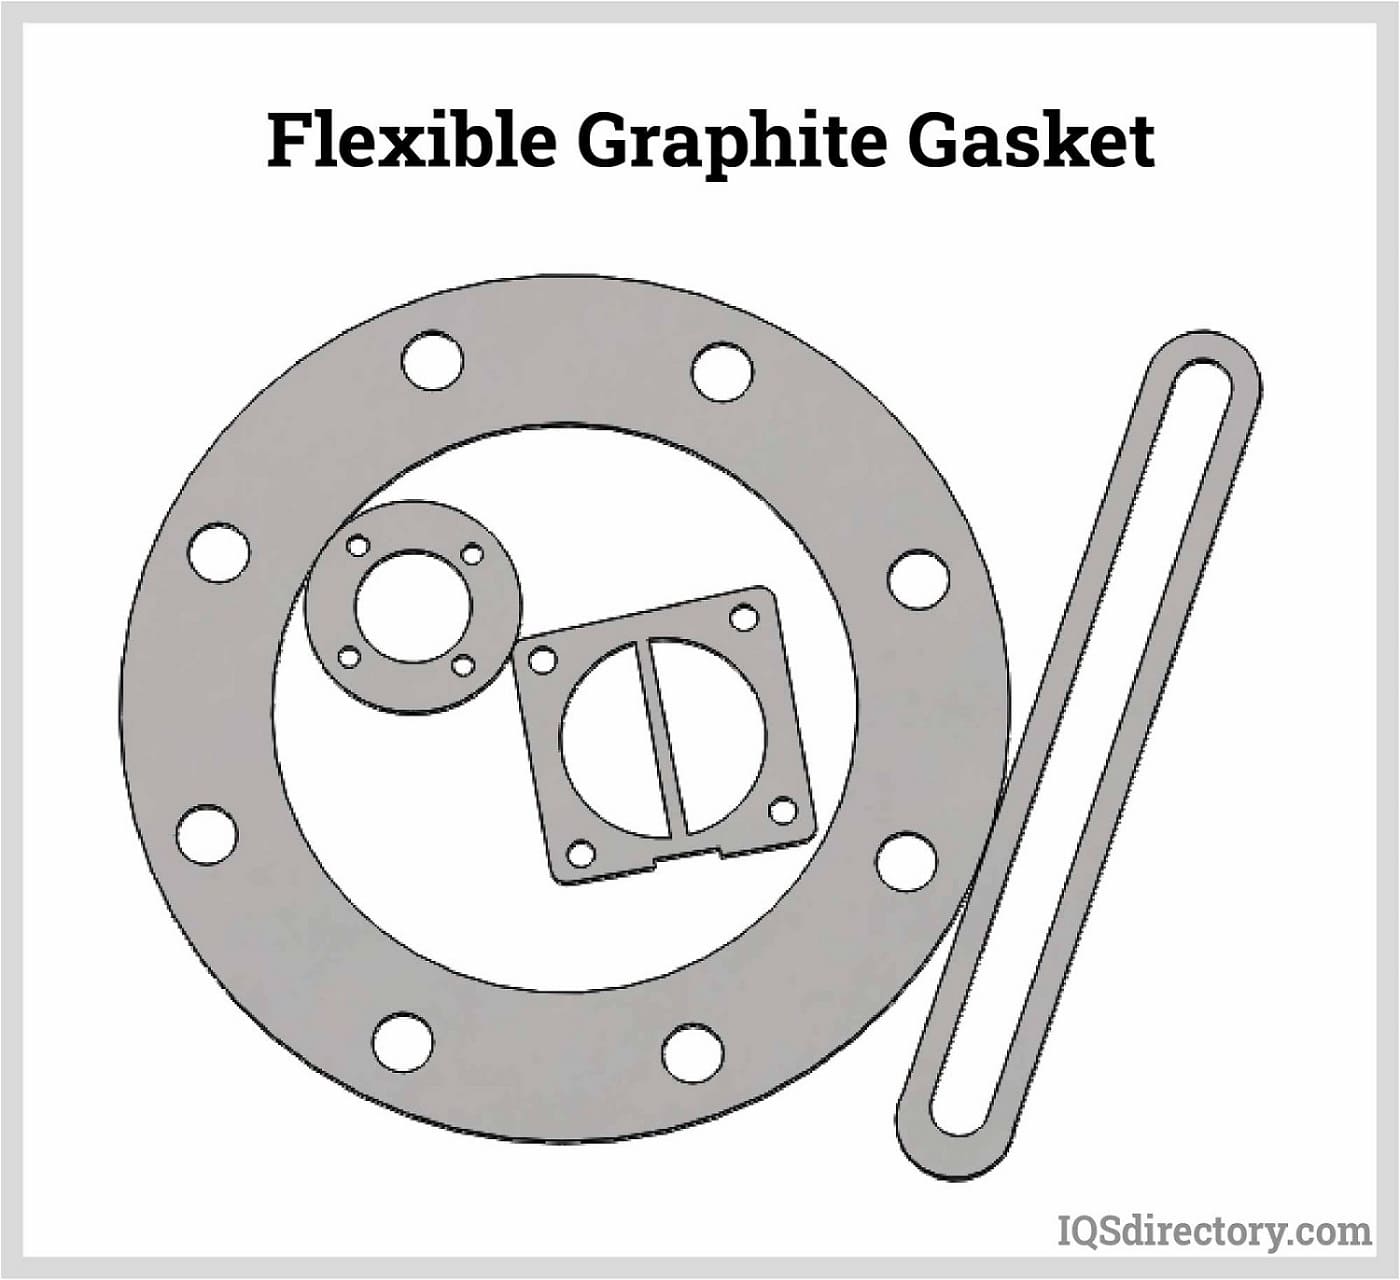 Flexible Graphite Gasket